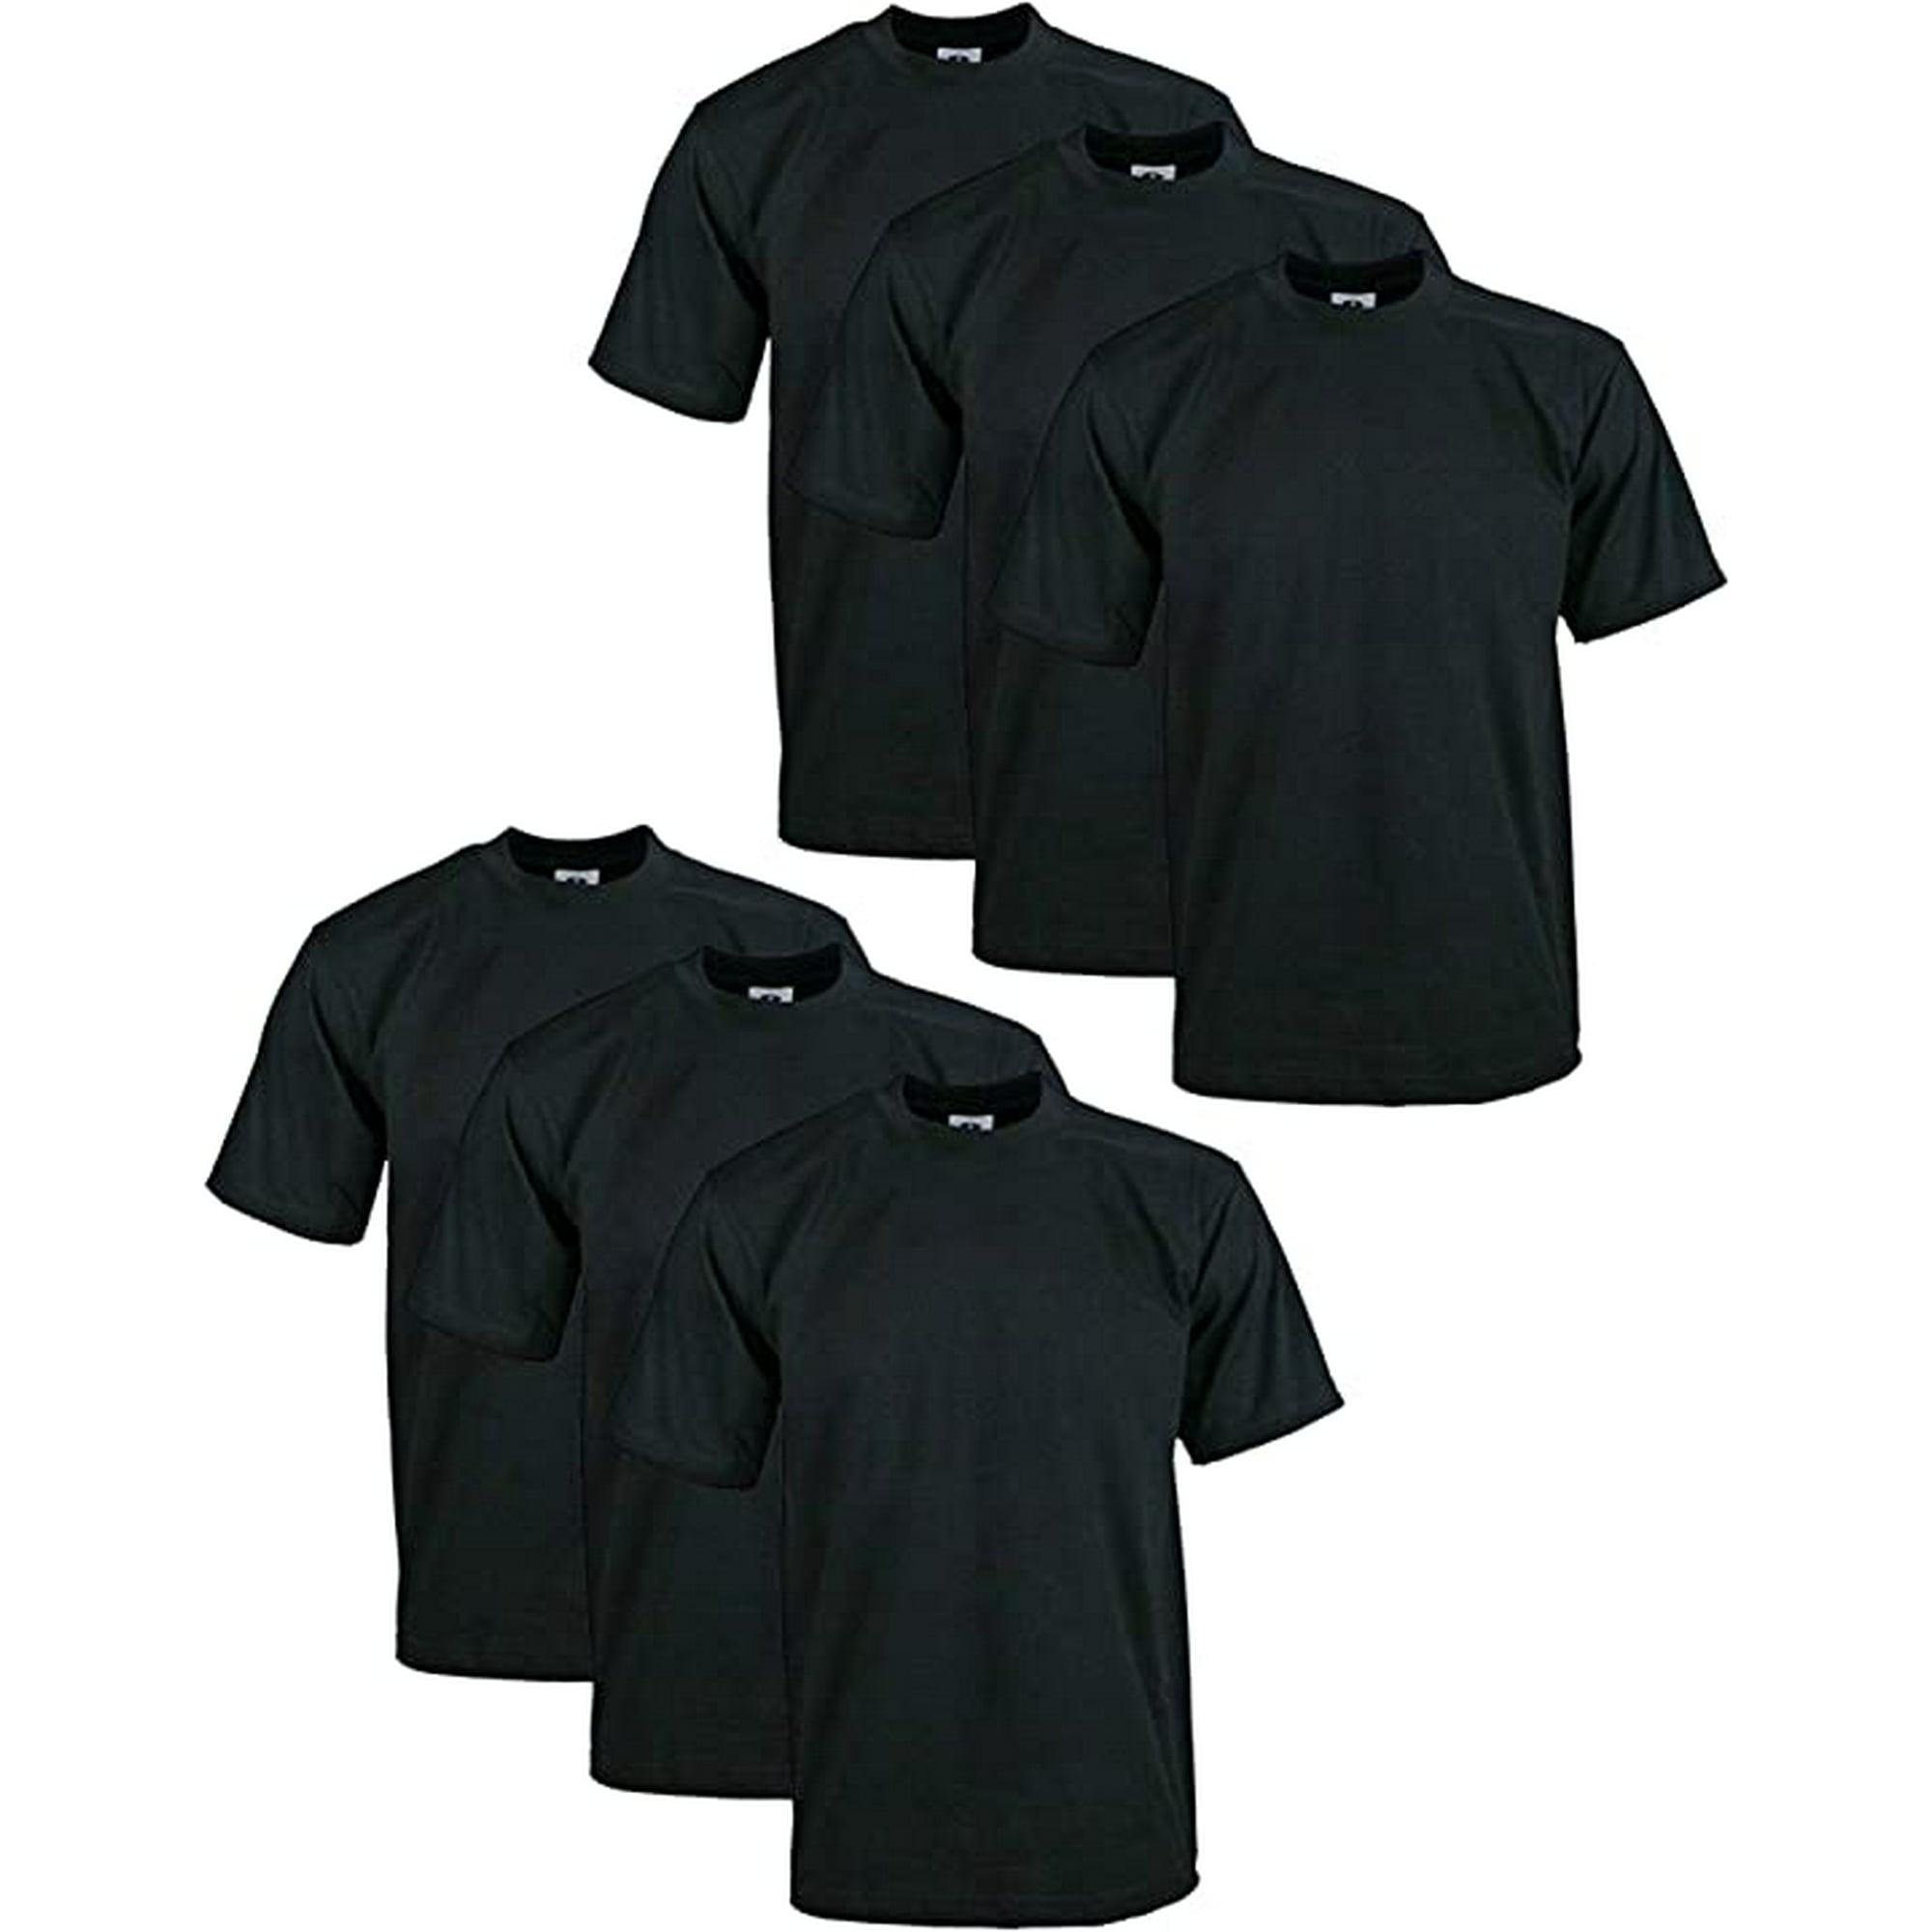 Pro Club Men's 6-Pack Heavyweight Cotton Short Sleeve Crew Neck T-Shirt 